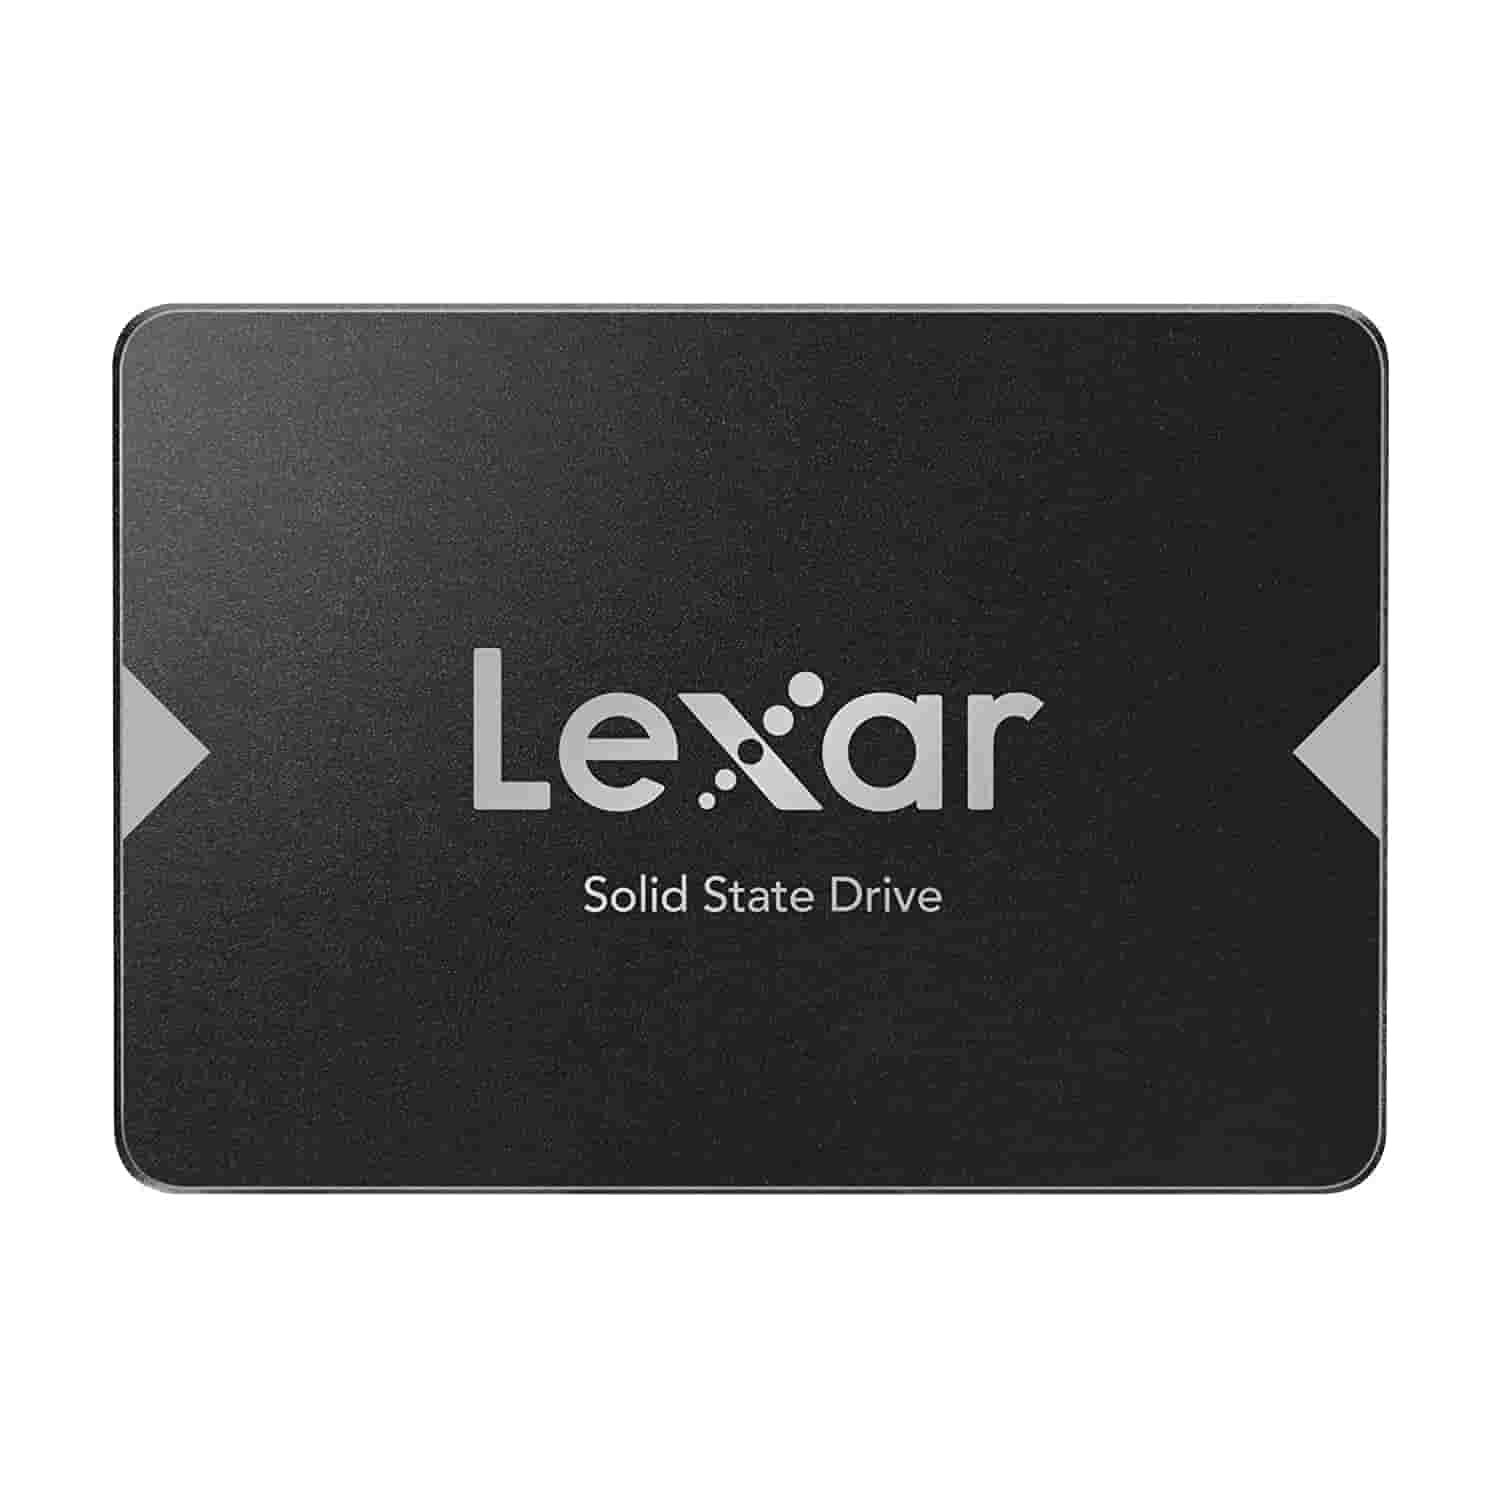 Lexar NS10 LITE 240GB SATA Internal SSD